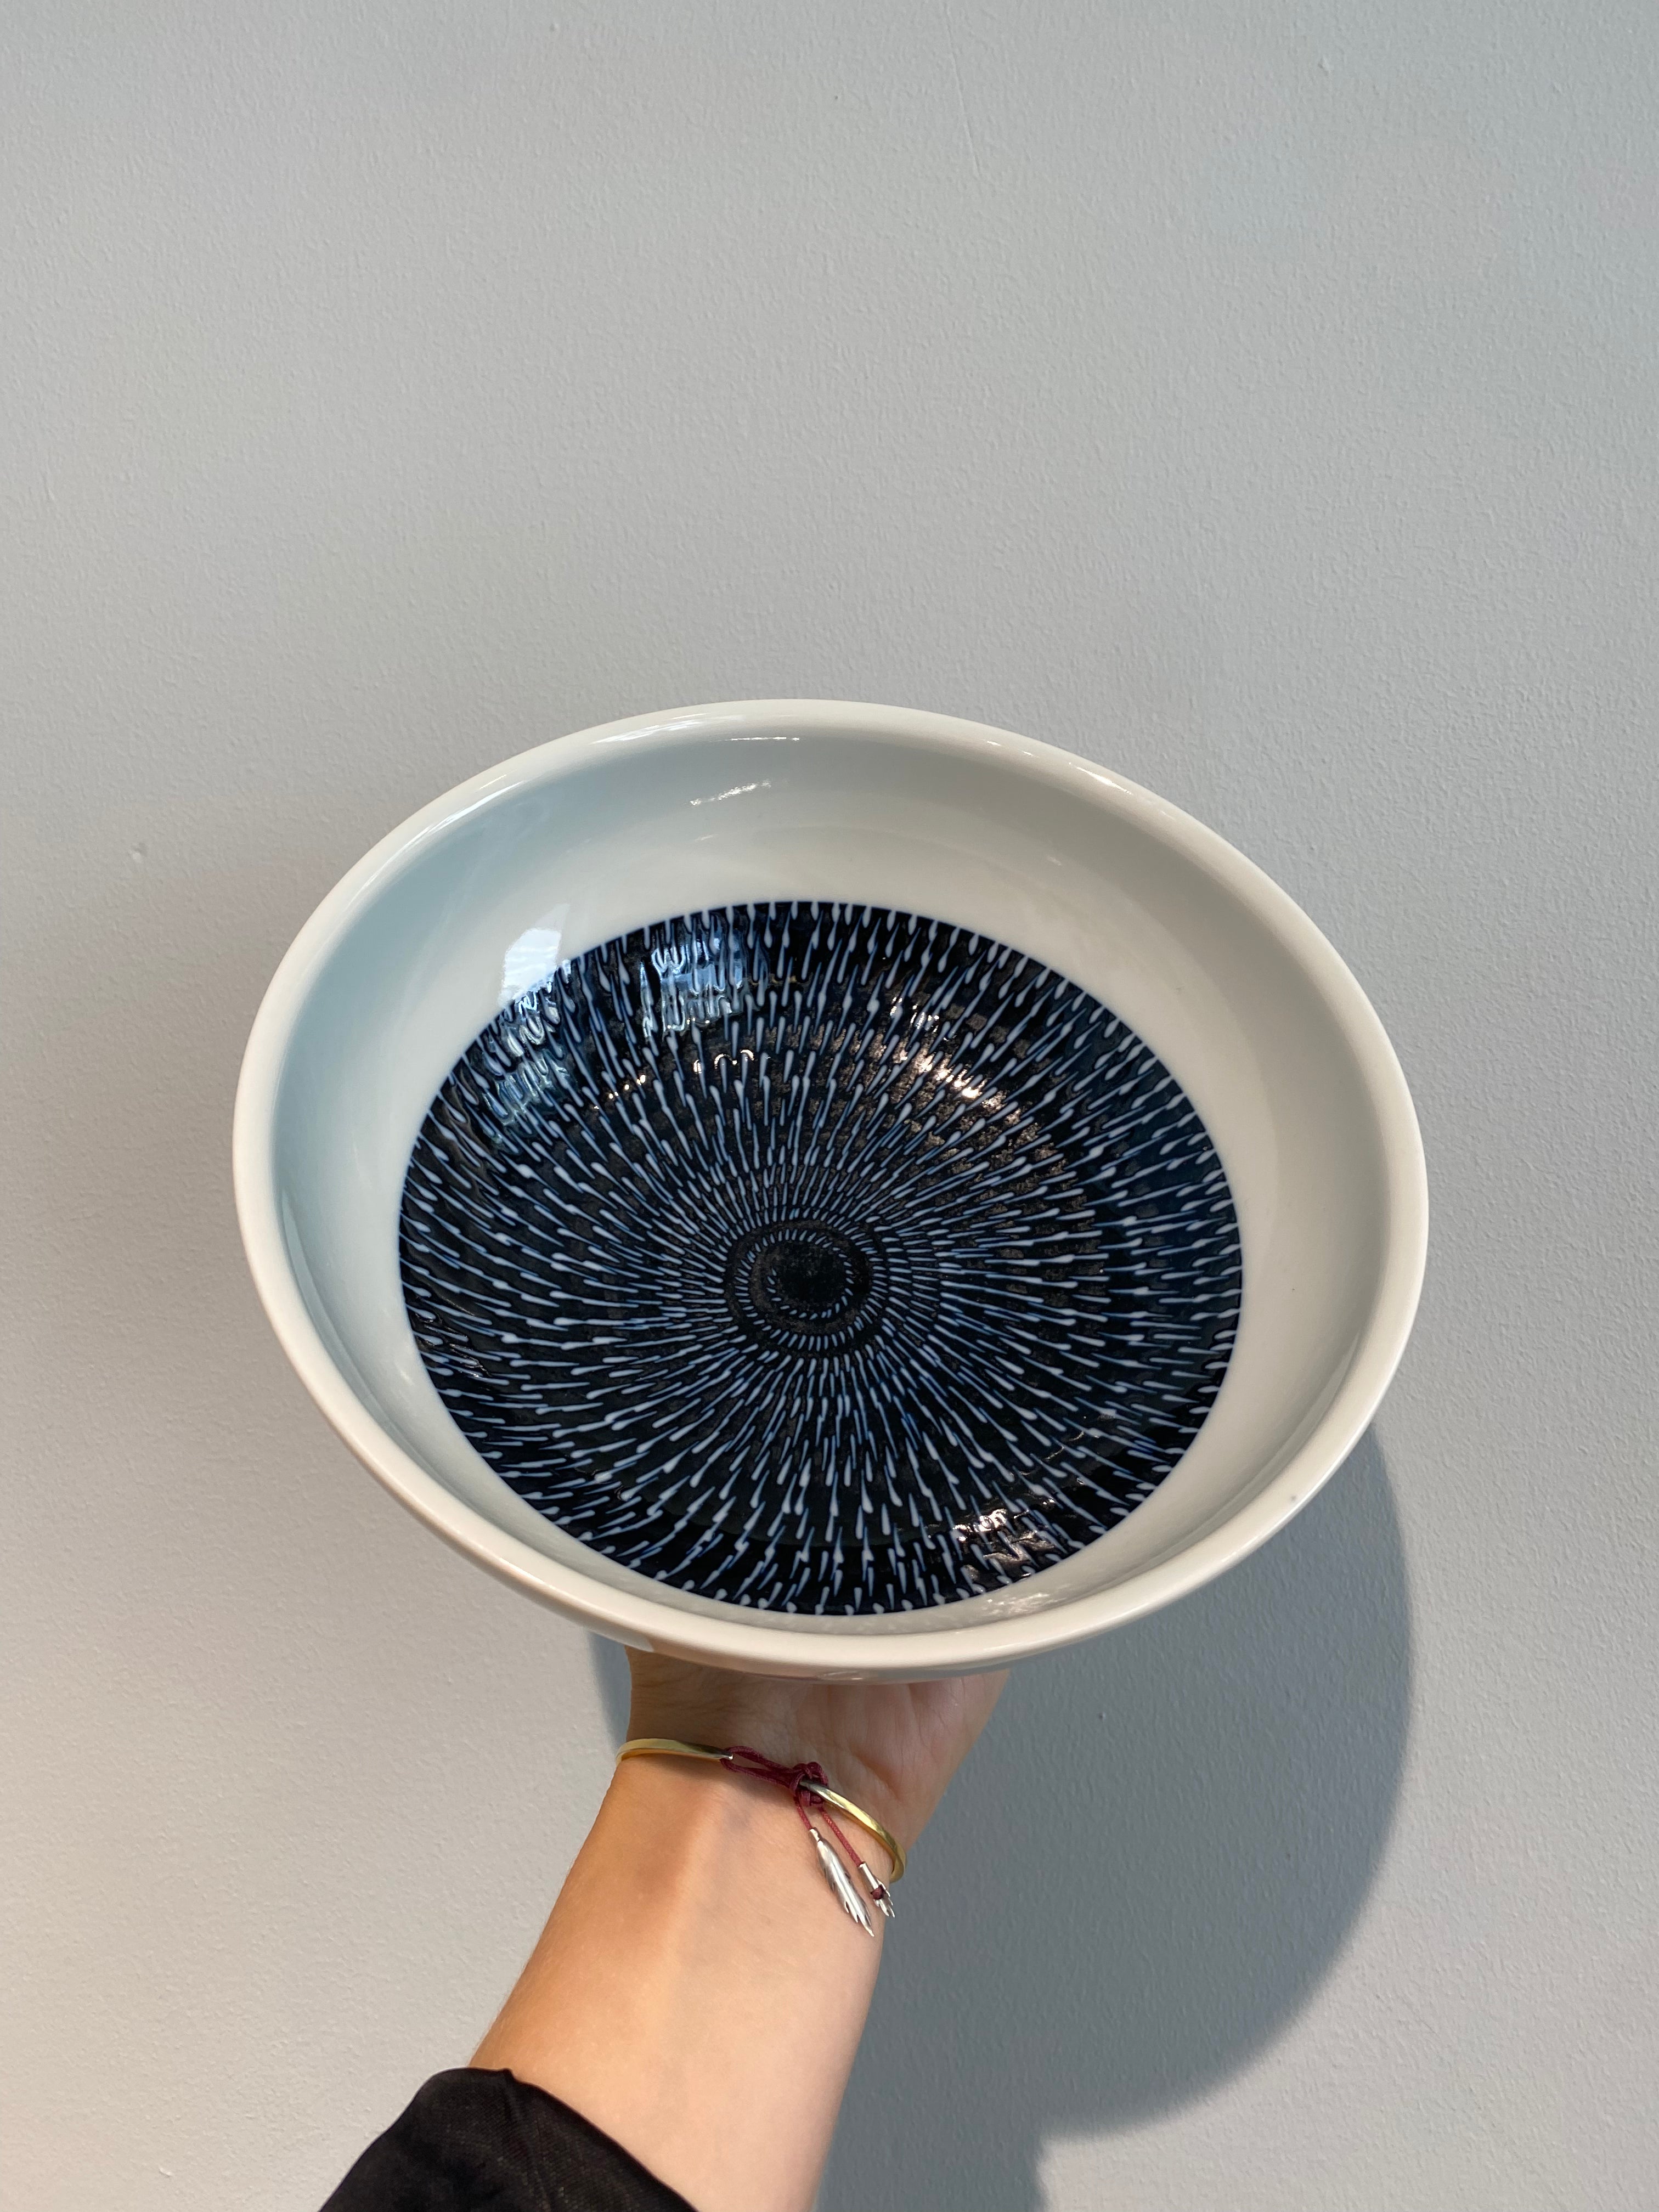 Large bowl with dark blue pattern